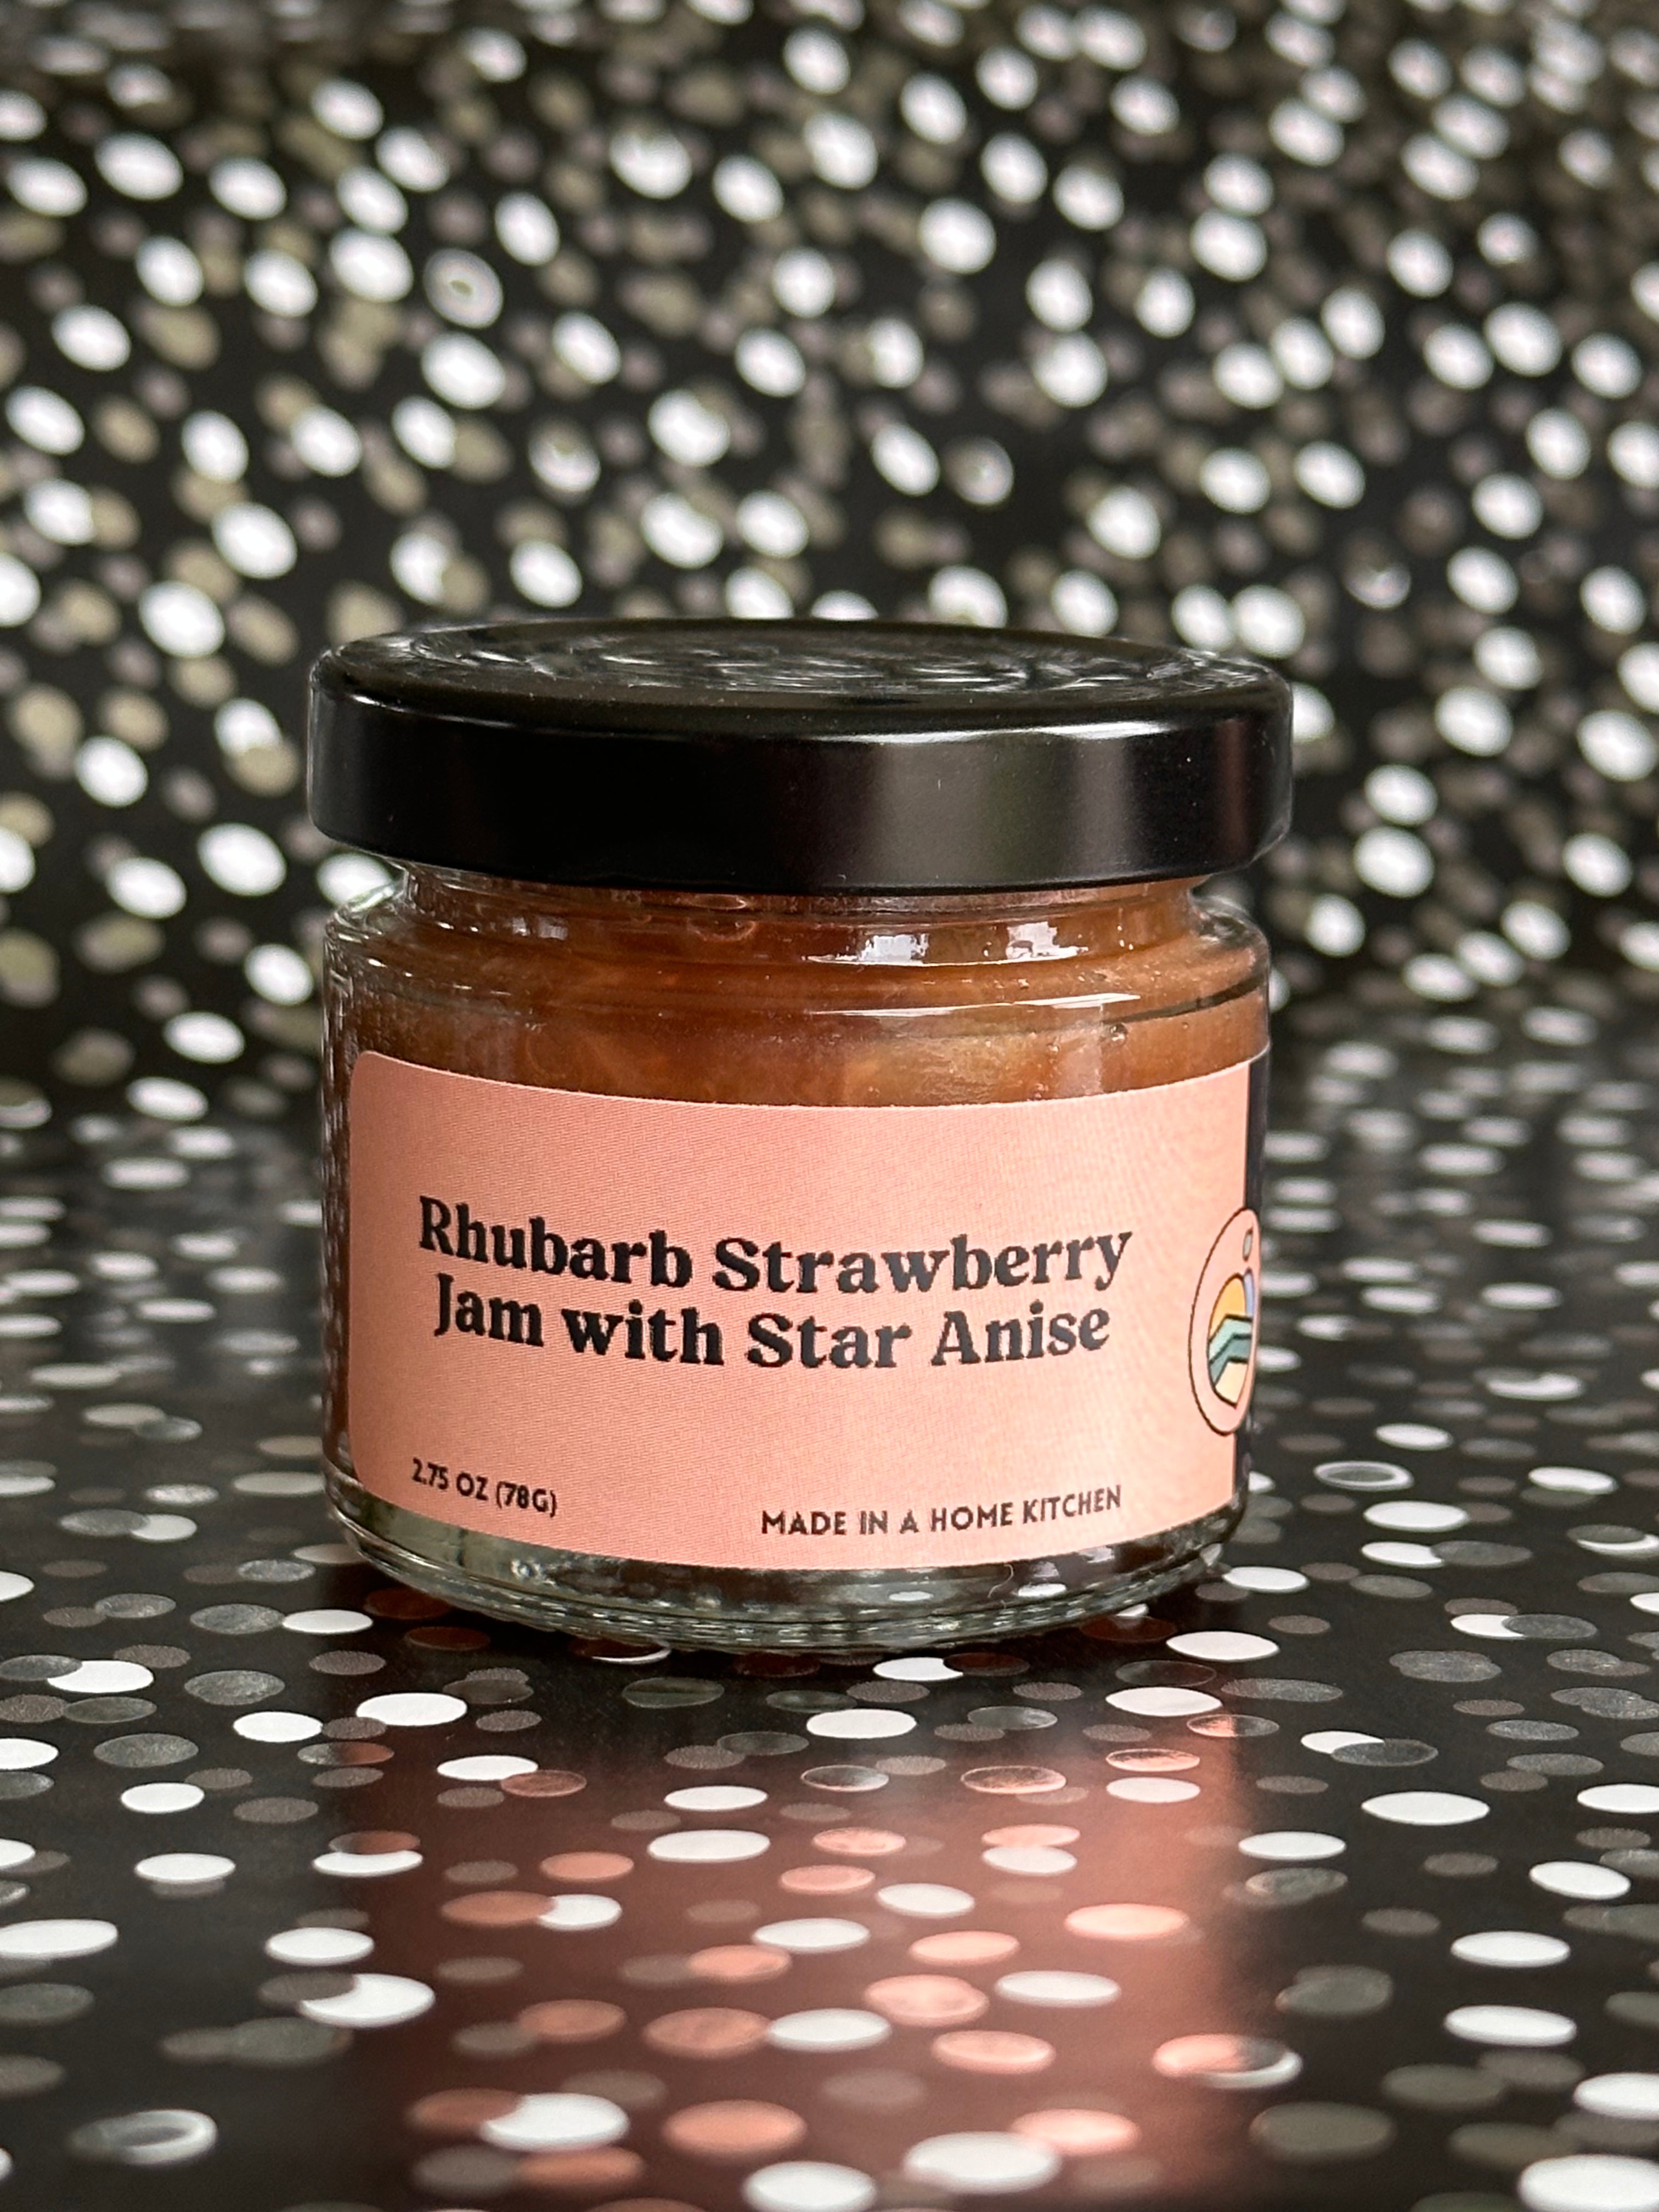 Rhubarb & Strawberry Jam with Star Anise